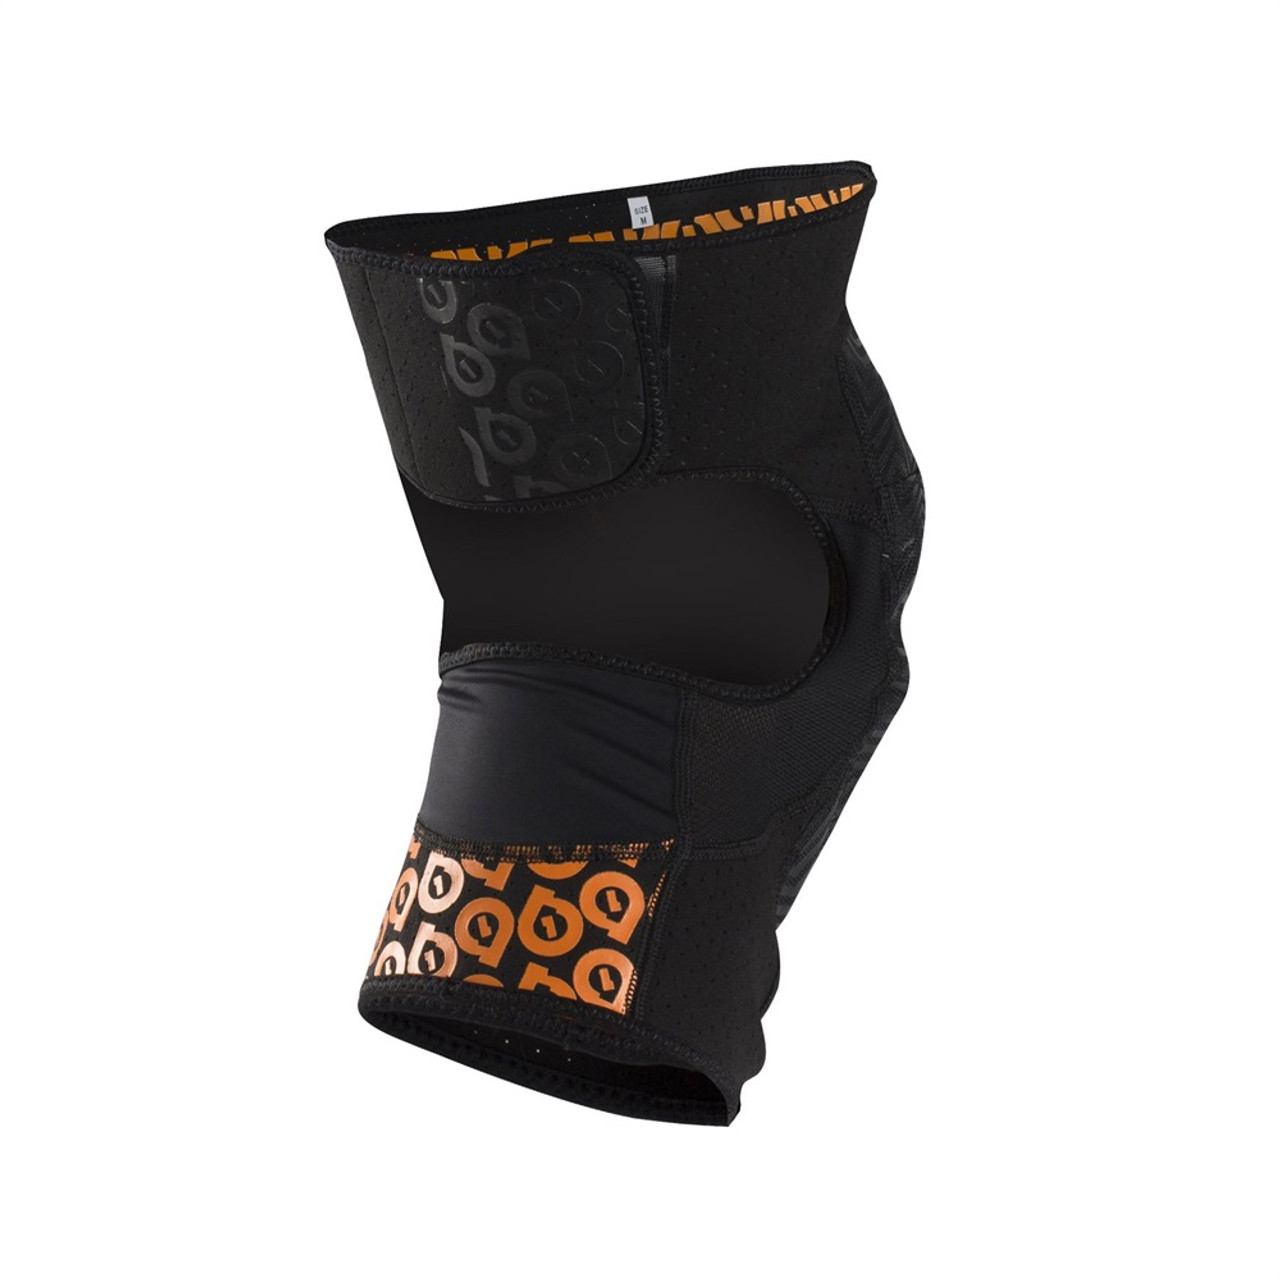 SixSixOne Comp Am MTB Downhill Knee Guard In Black All Sizes